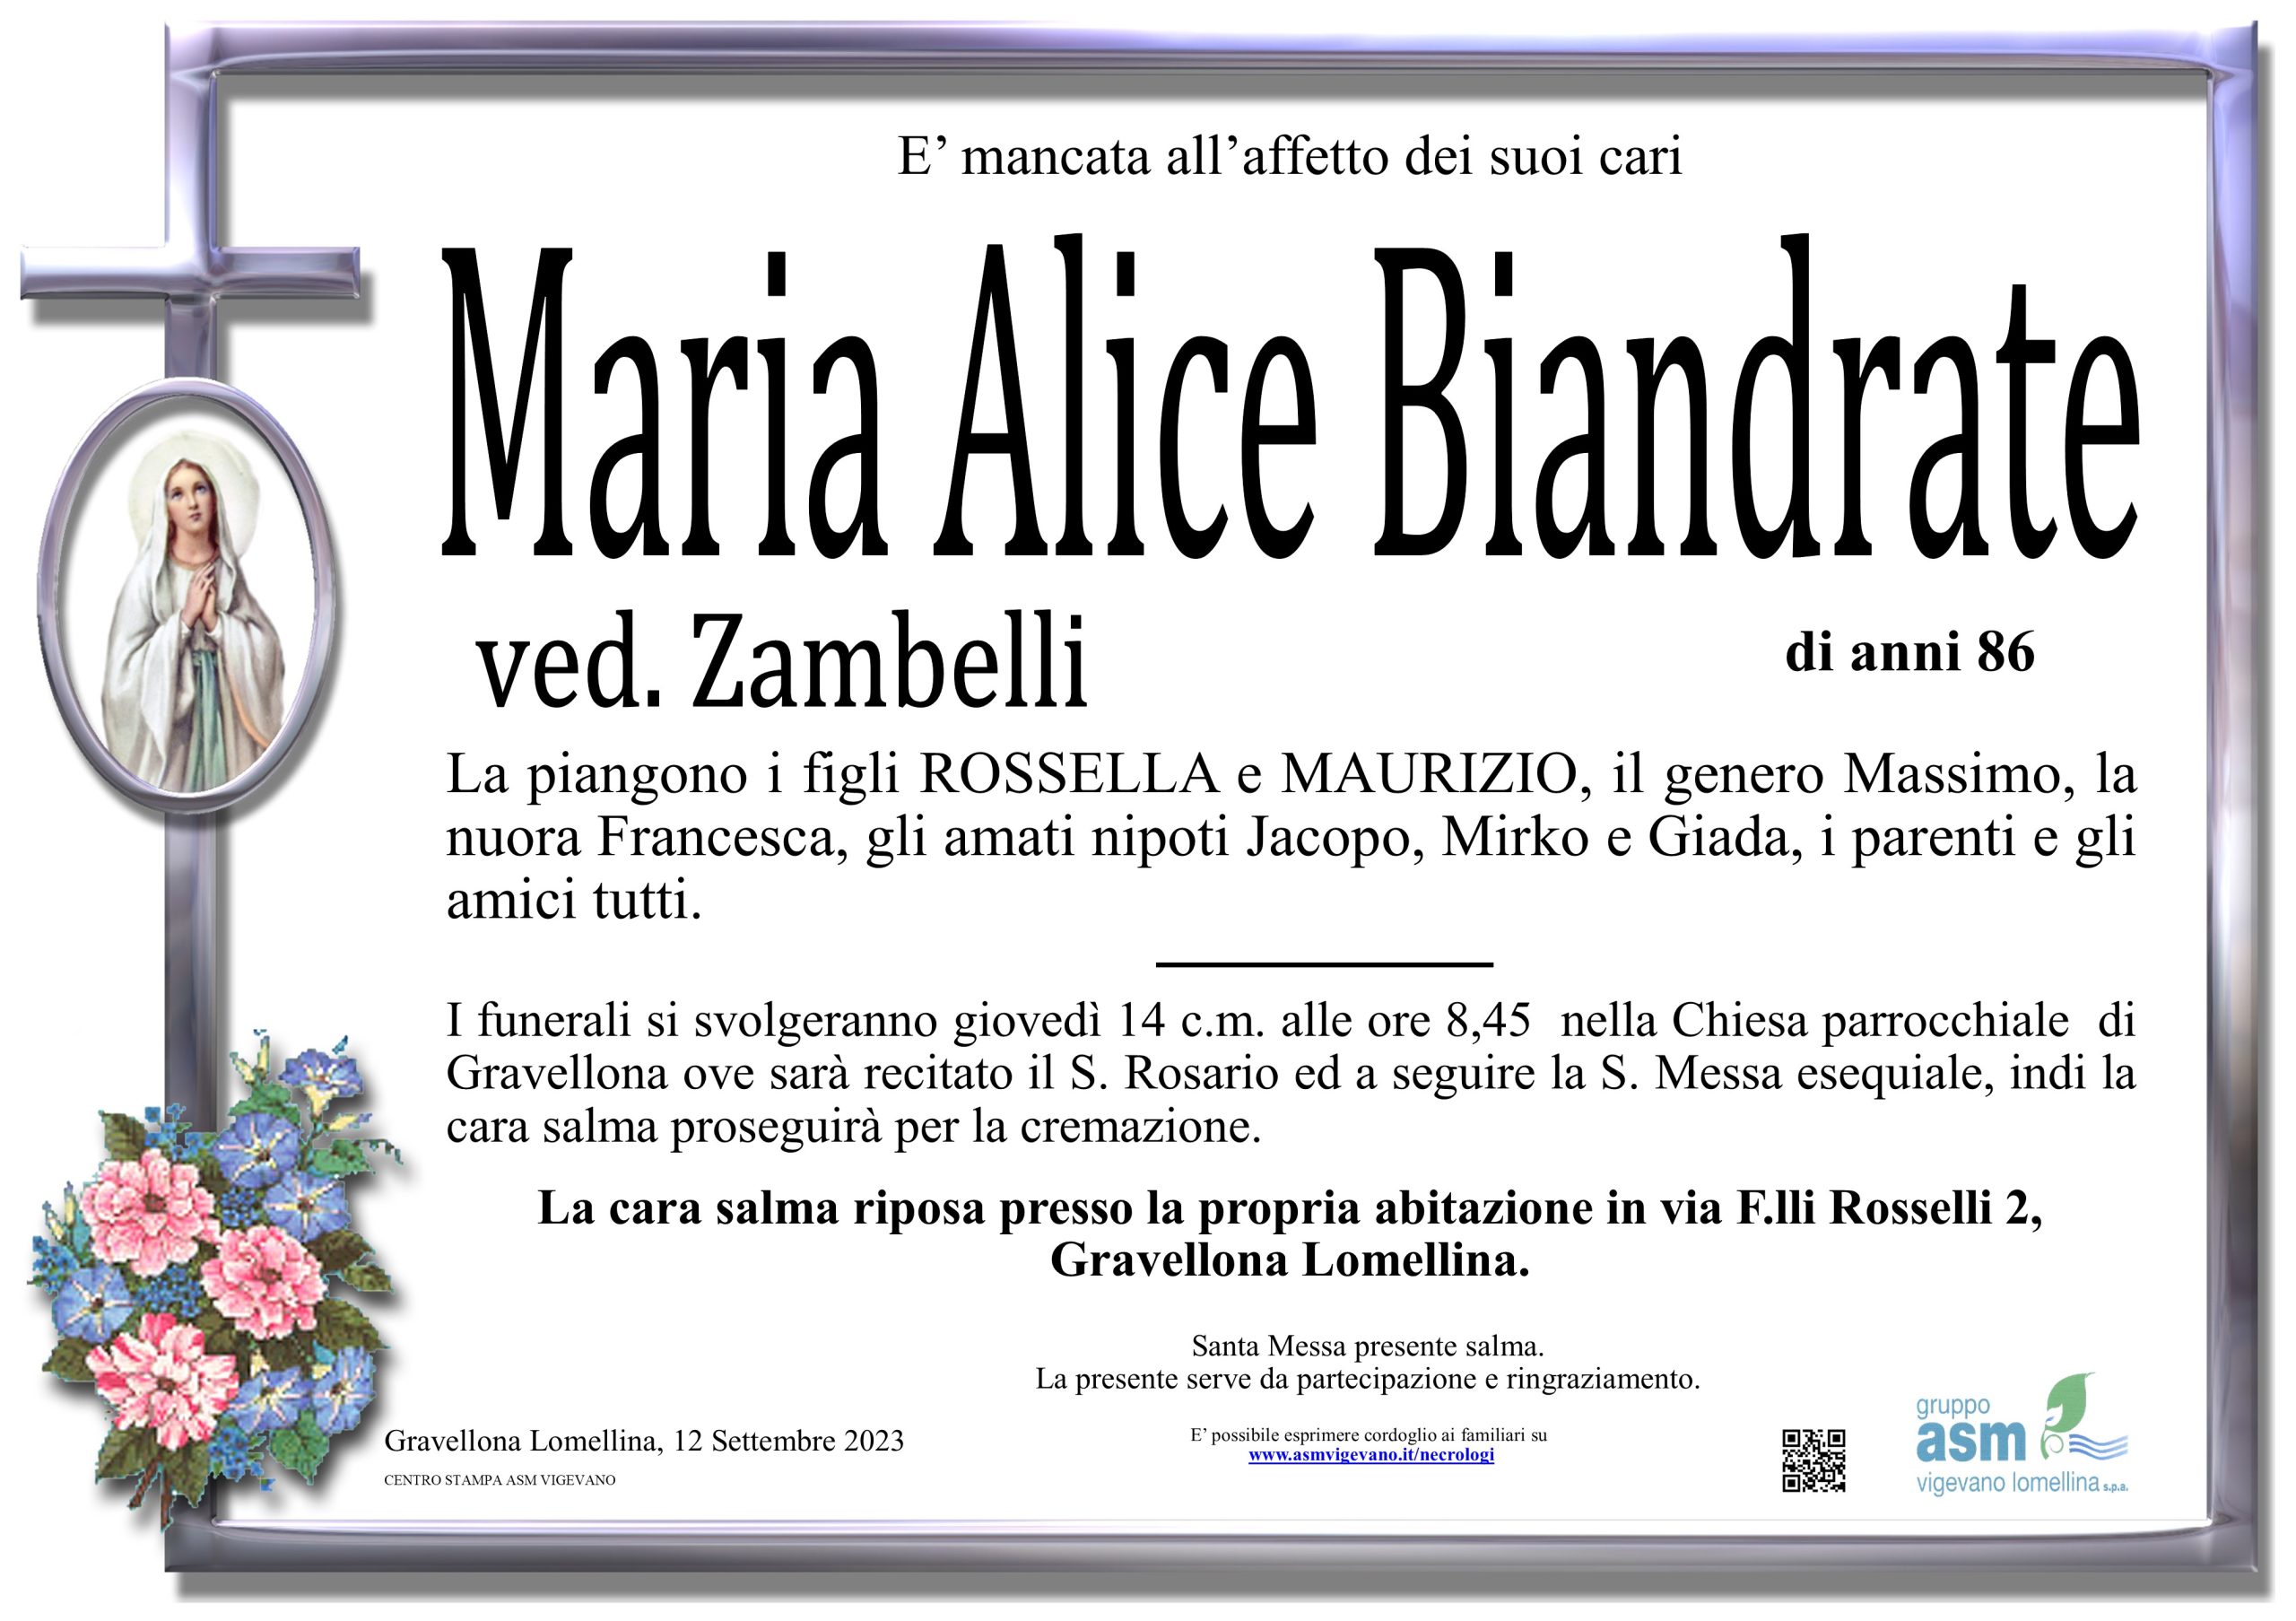 Maria Alice Biandrate